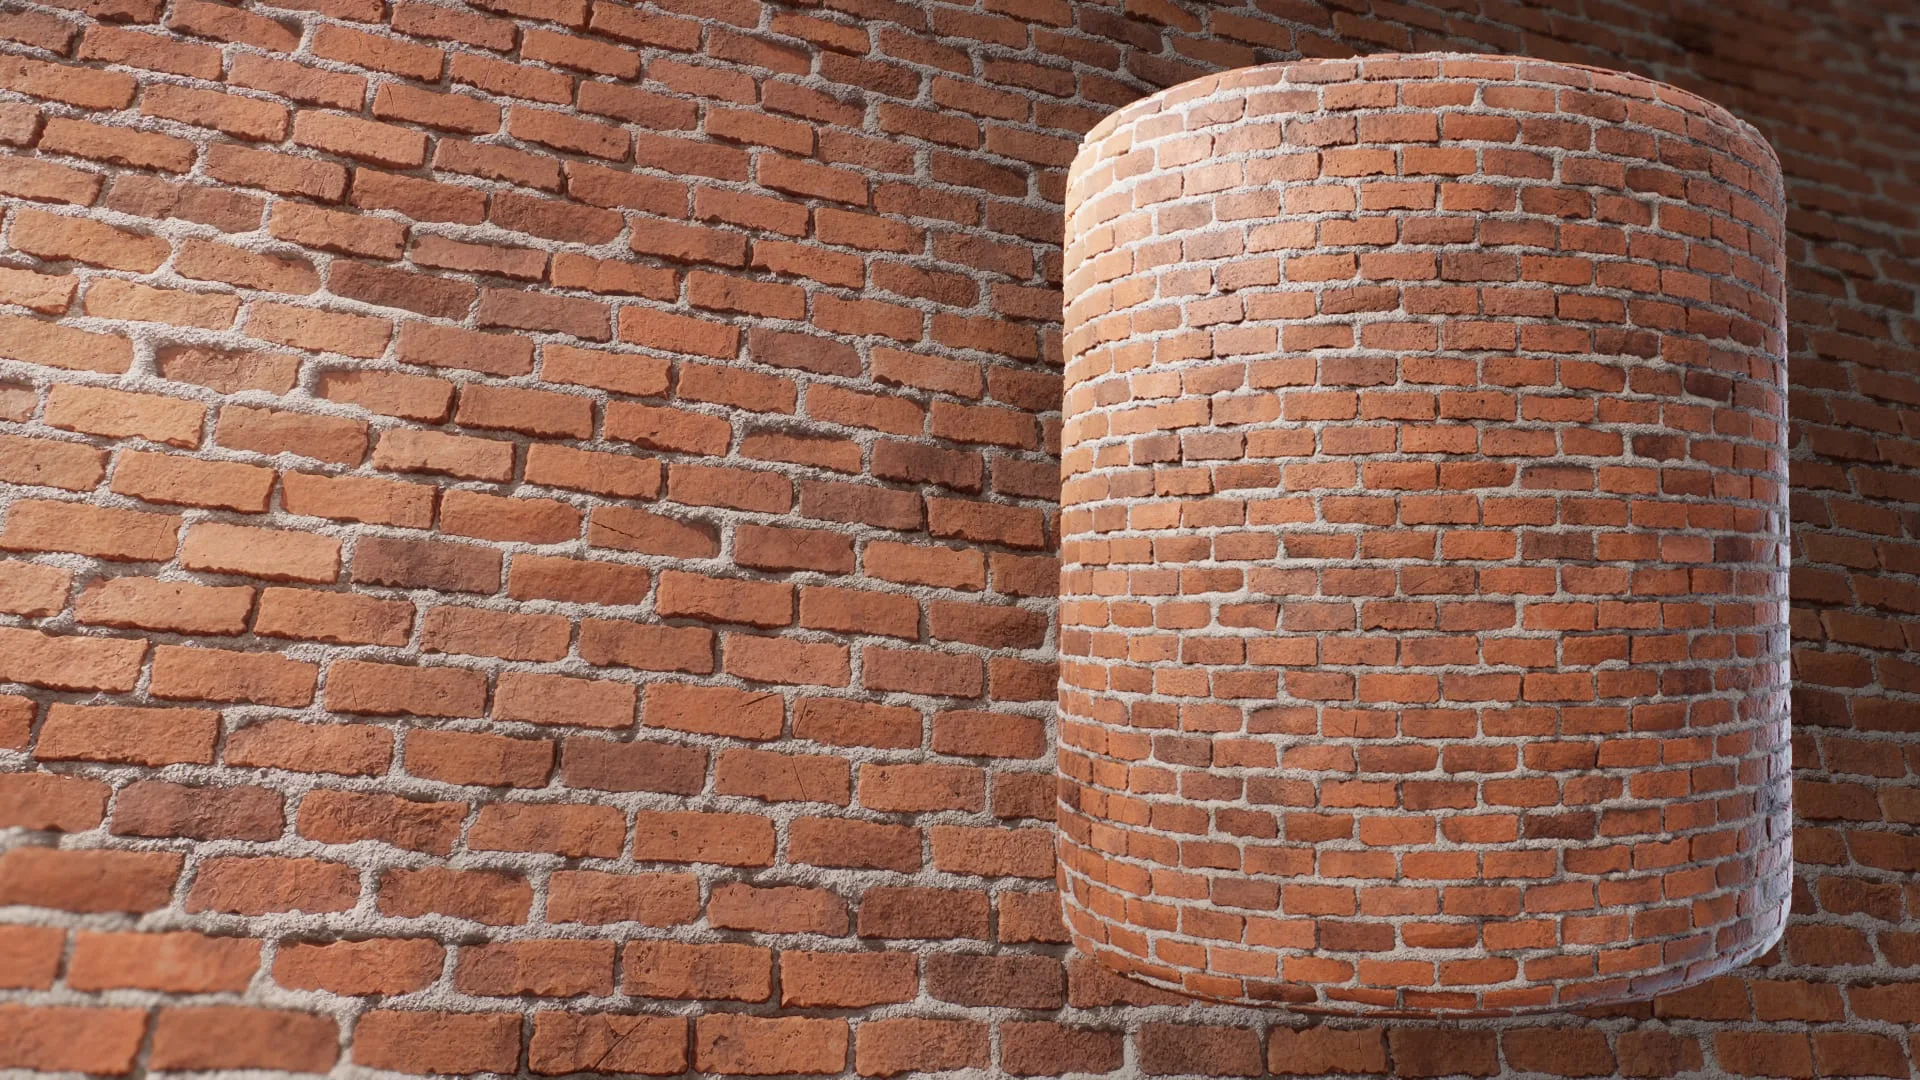 Brick Wall - Substance Designer